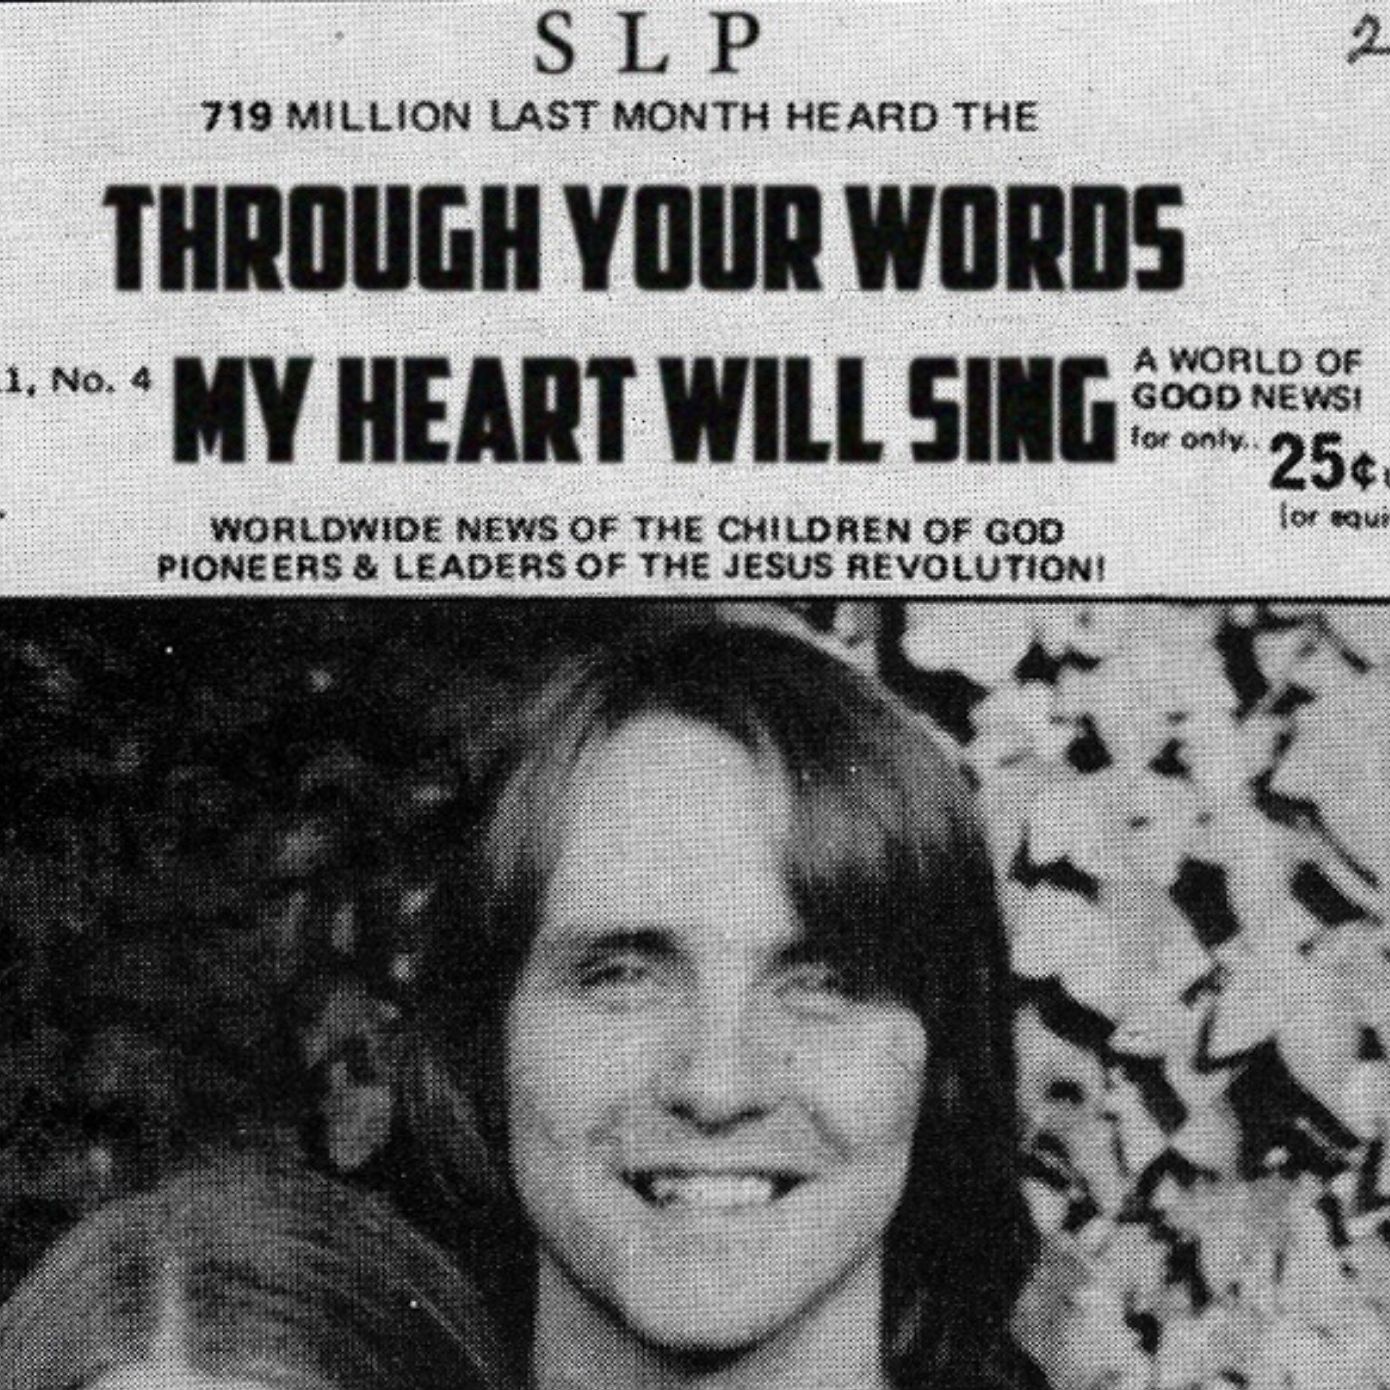 SLP, "Through Your Words My Heart Will Sing" (SR140, 2015)